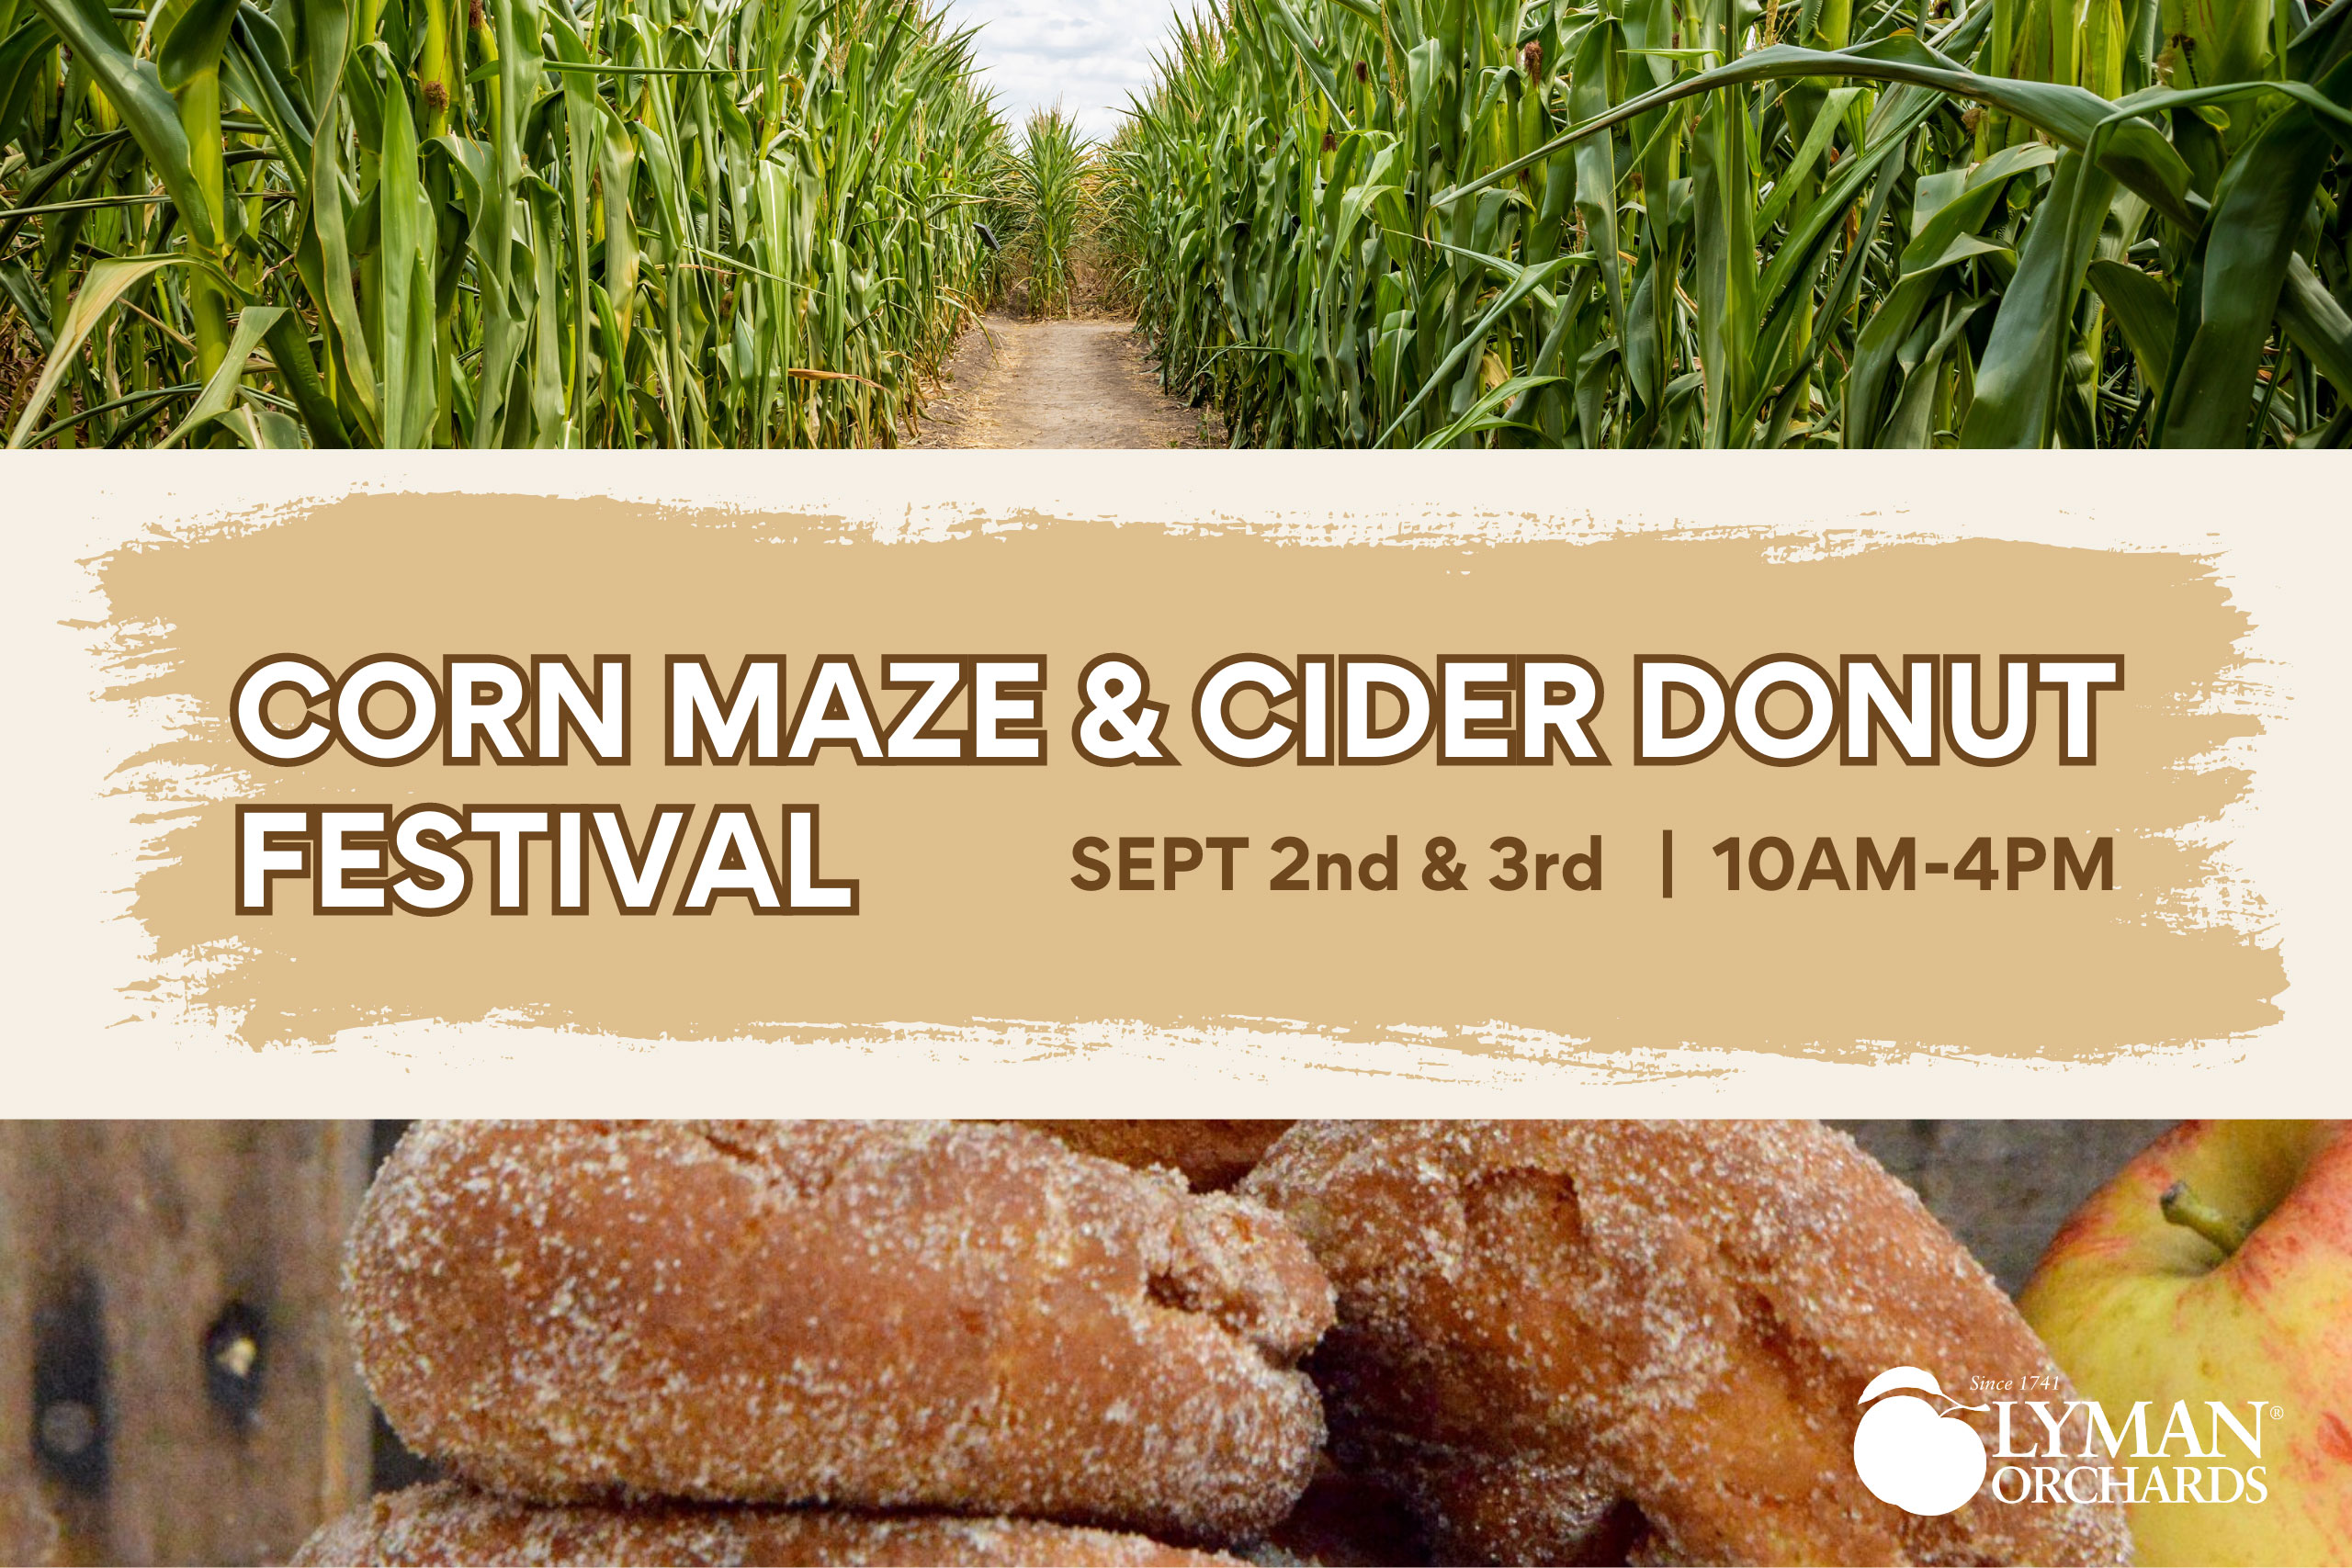 The Corn Maze and Cider Donut Festival